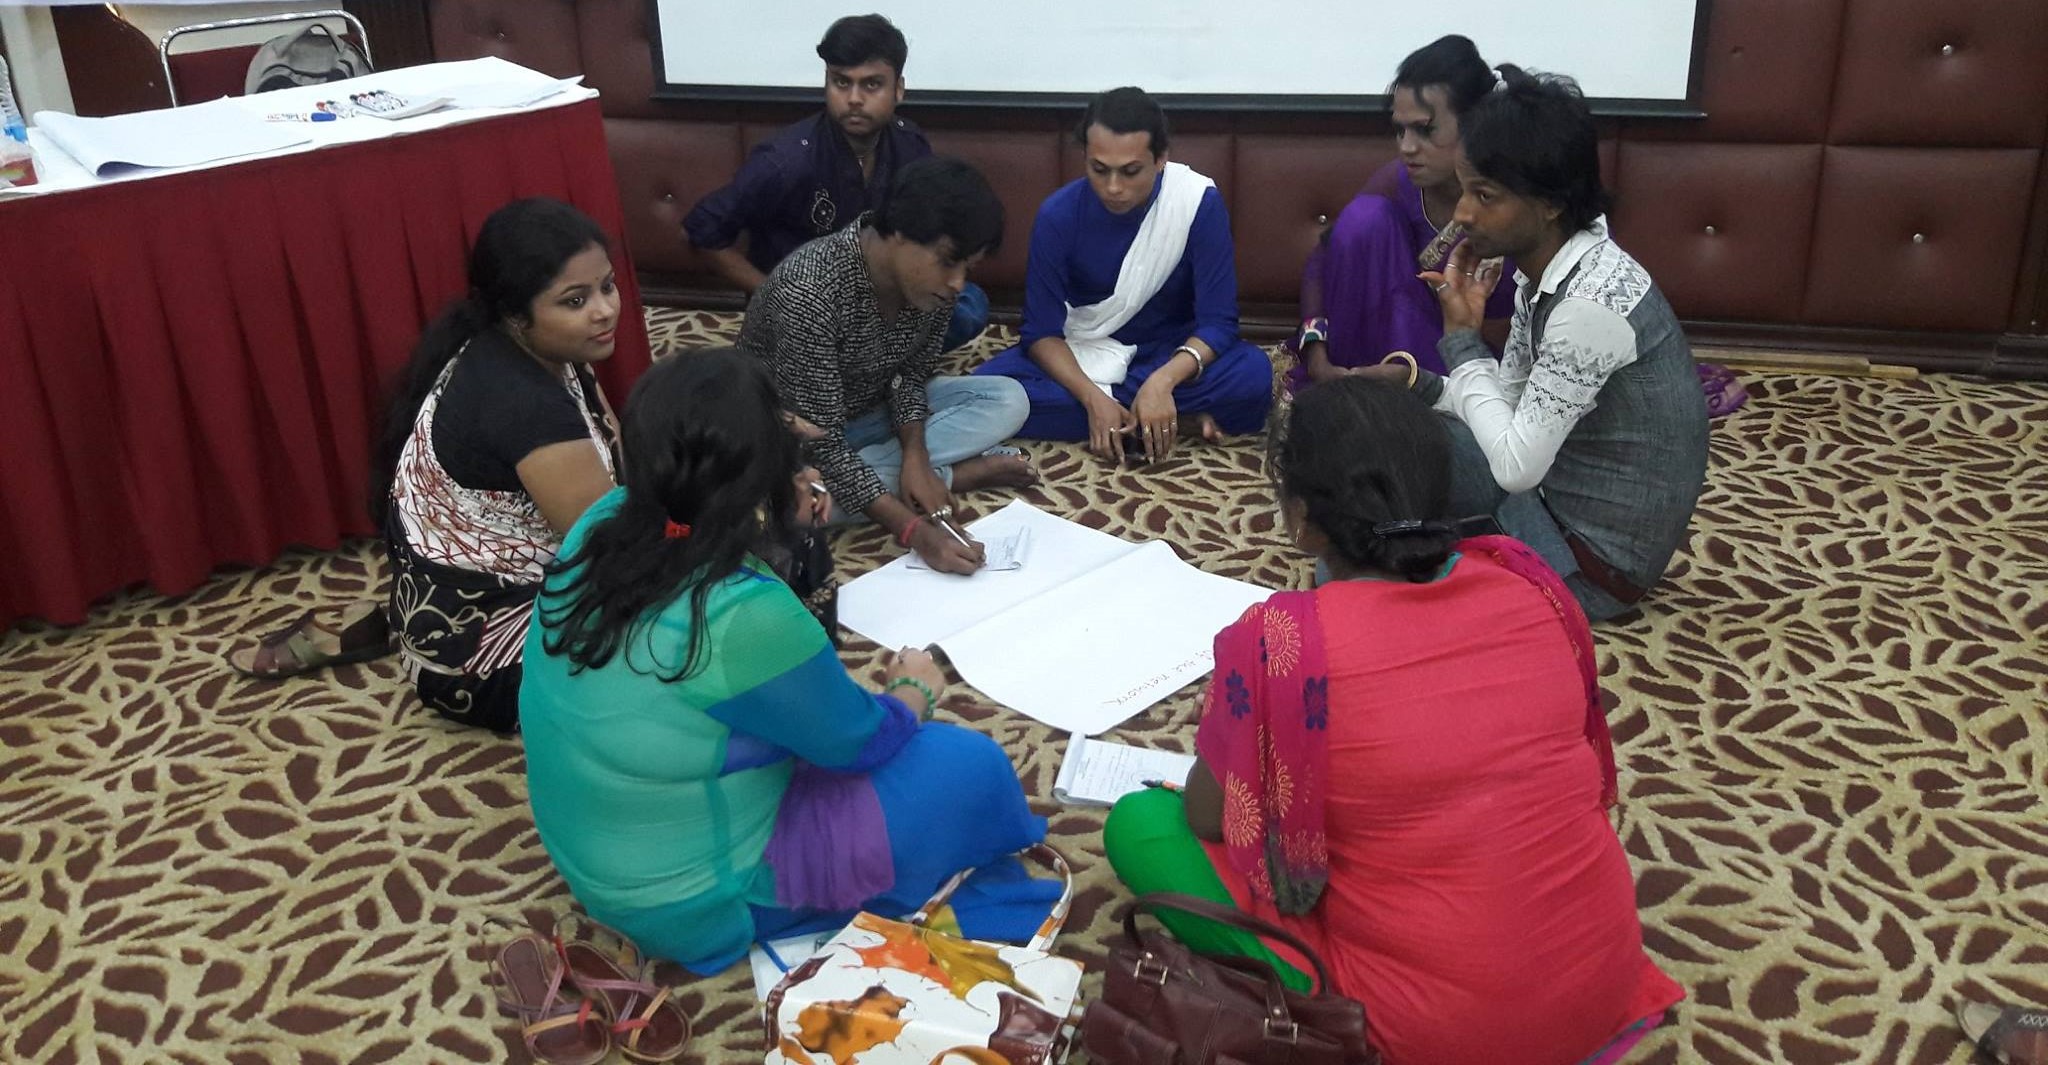 Kolkata Rista: an NGO in Kolkata empowering transgender communities through inclusive activism